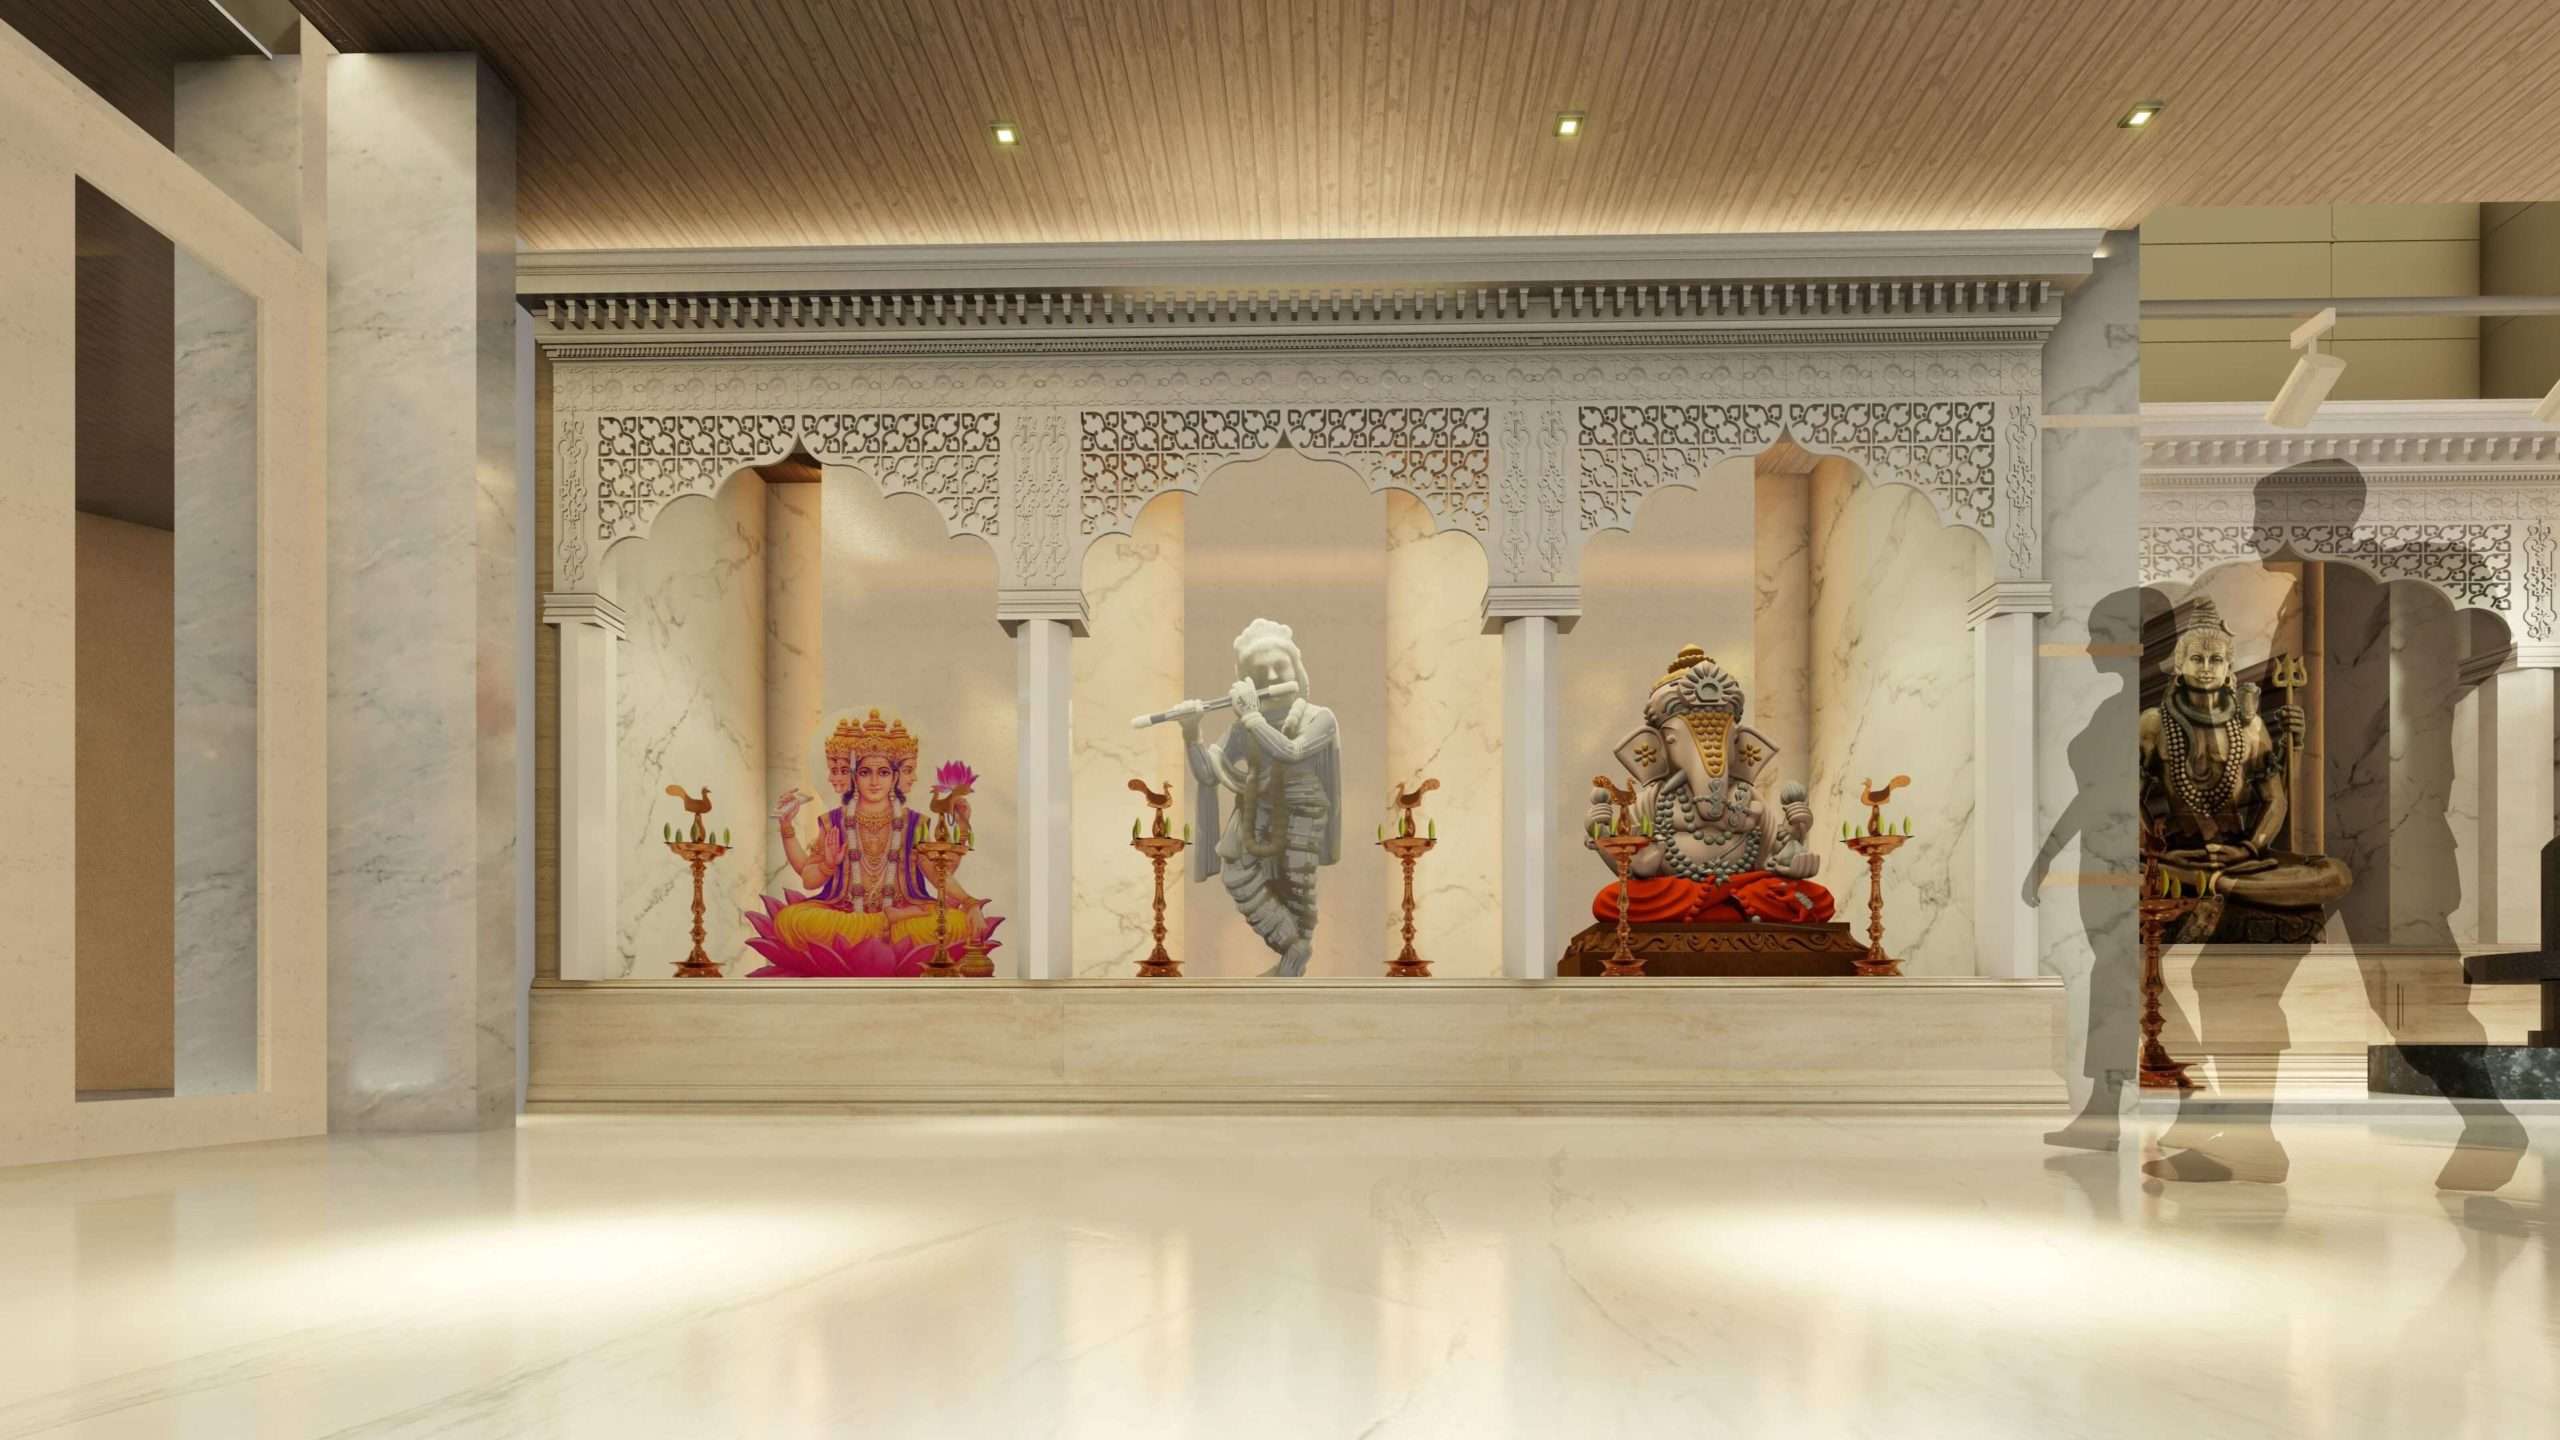 Ground Floor of new hindu temple